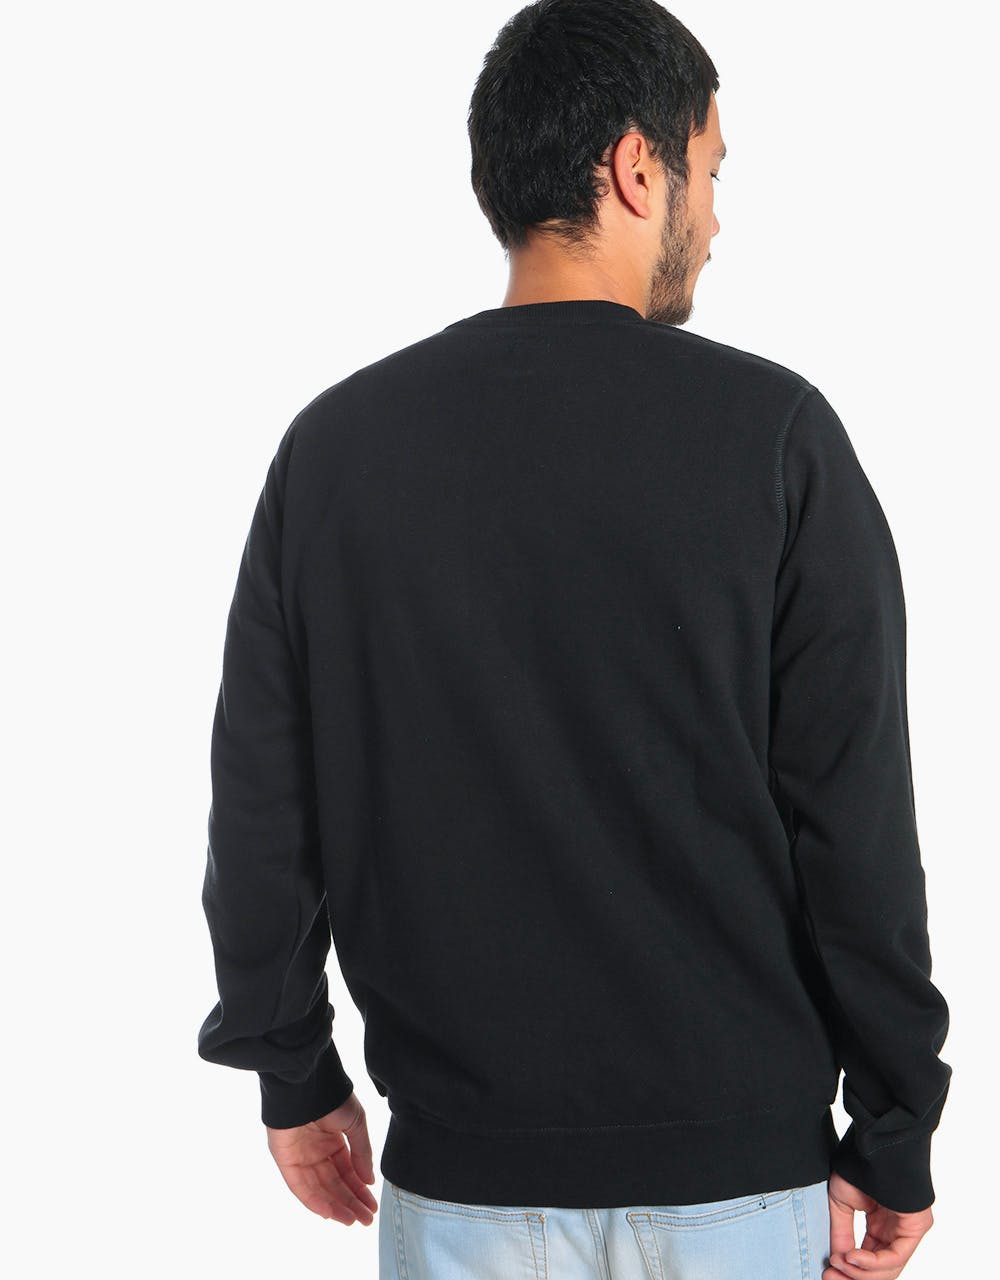 Dickies Washington Sweatshirt - Black